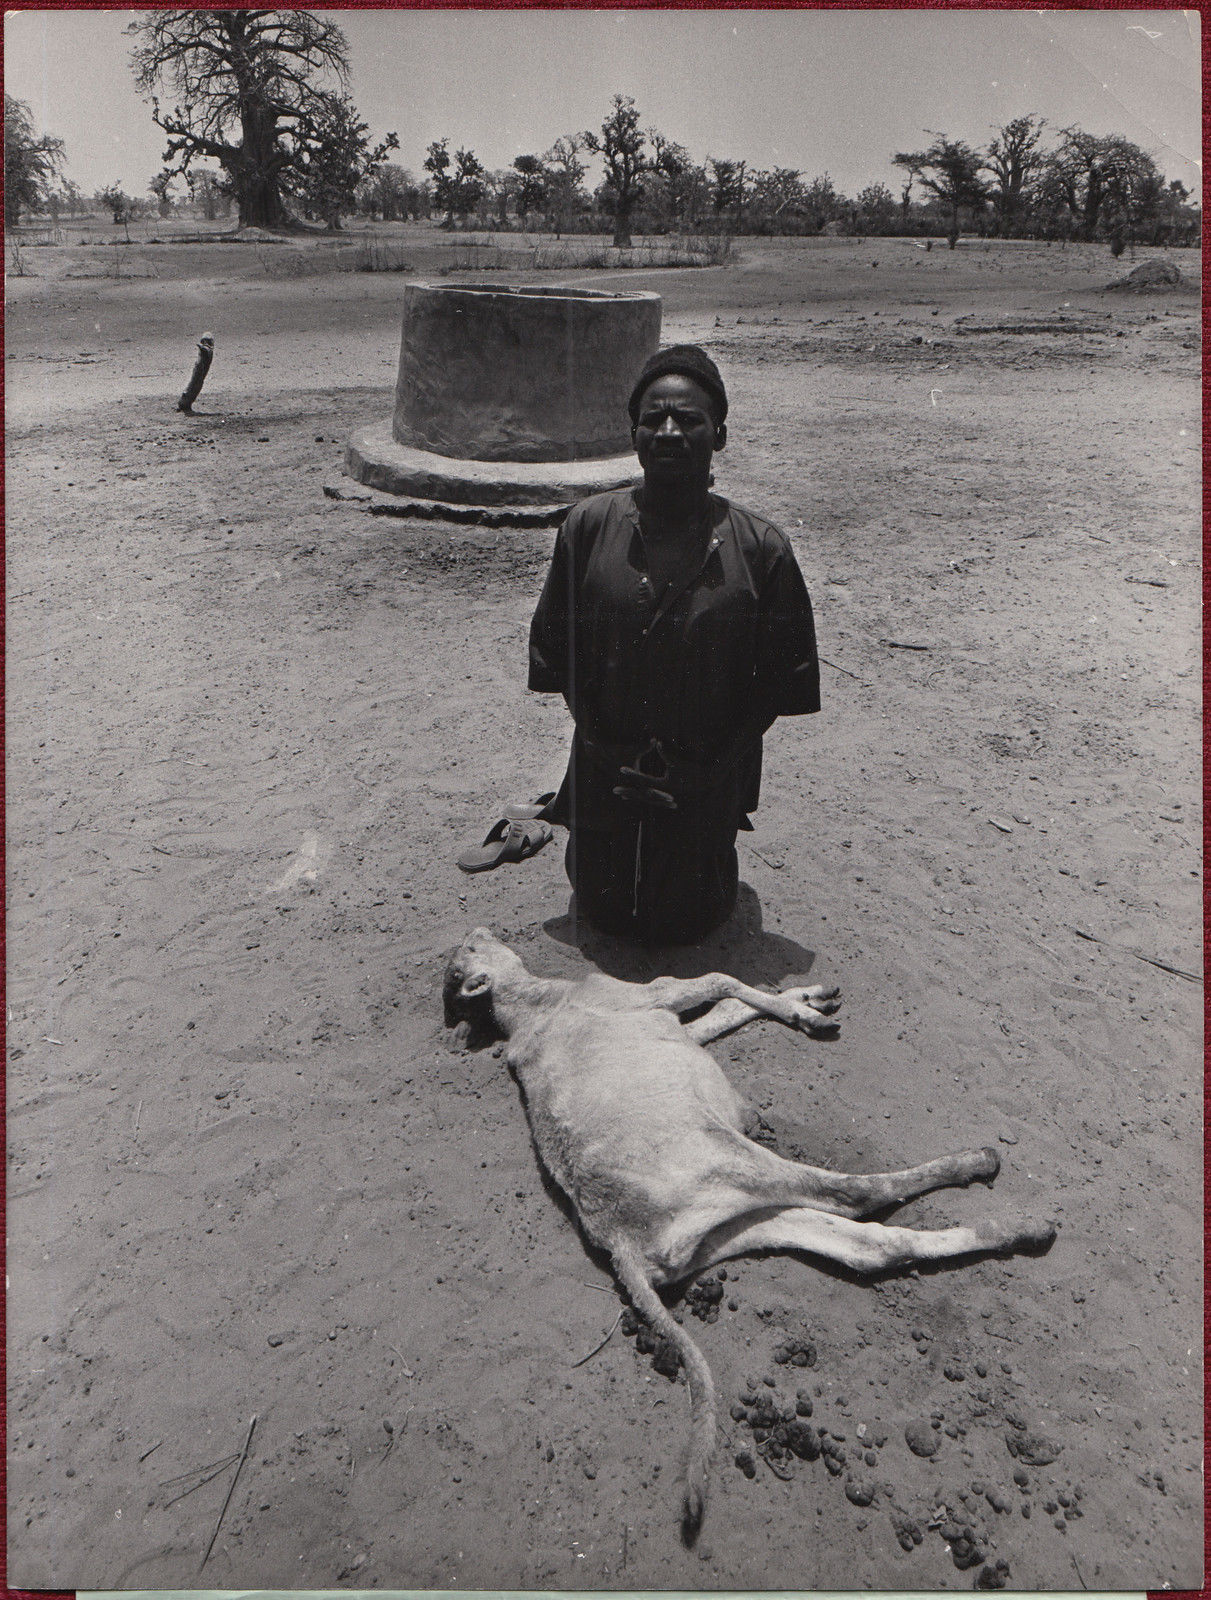 1973 Pressens Bild AB Photo Sweden West Africa Senegal Drought Dead Calf